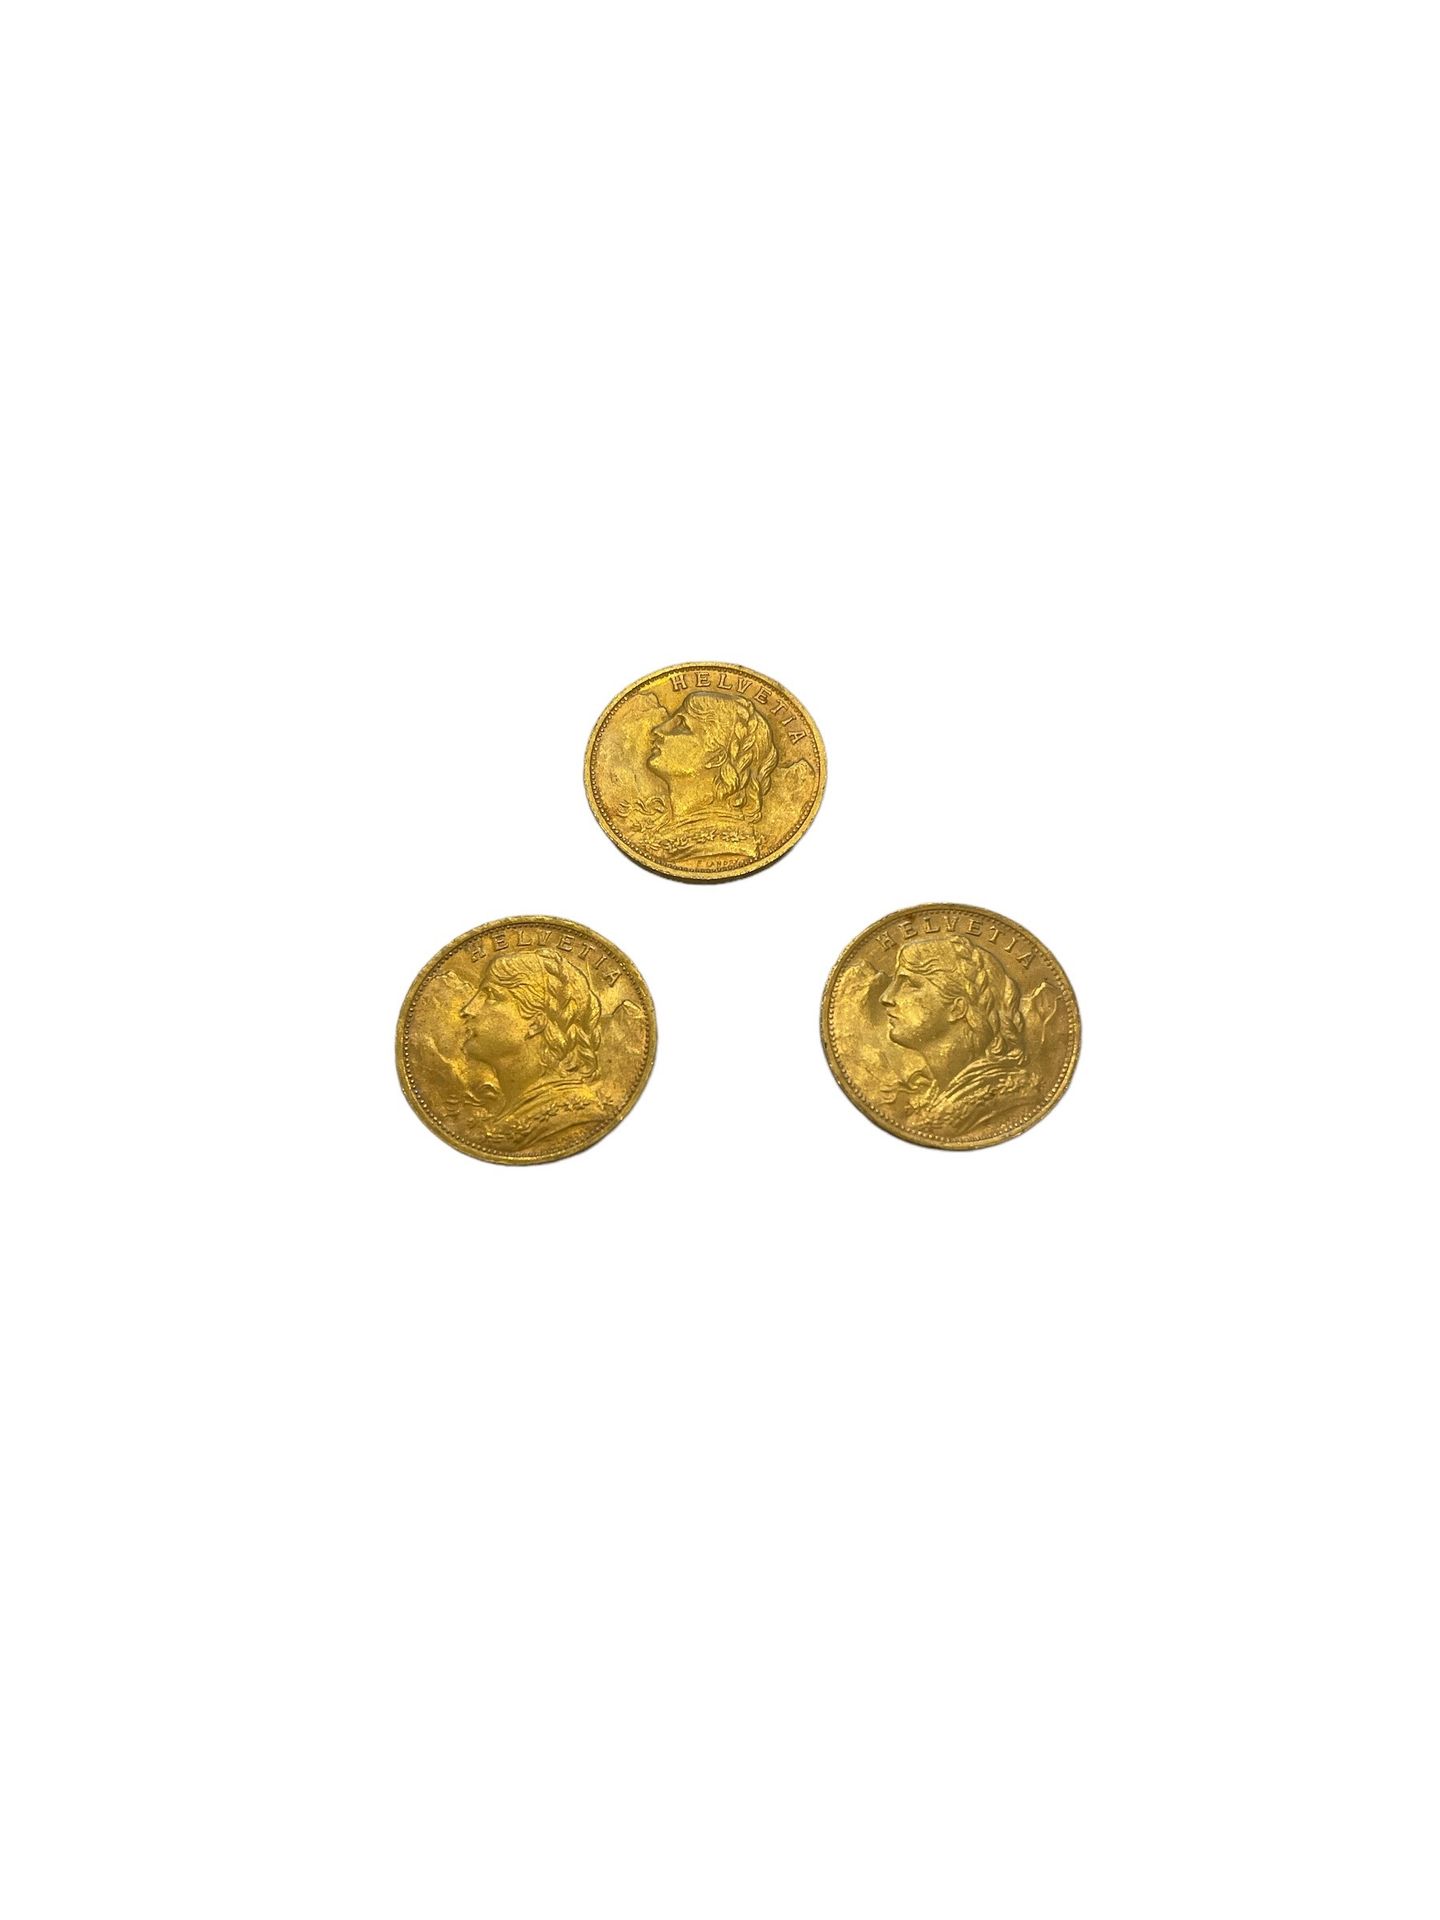 Null SUIZA
3 monedas de 20 francos oro
Peso : 19,3 g